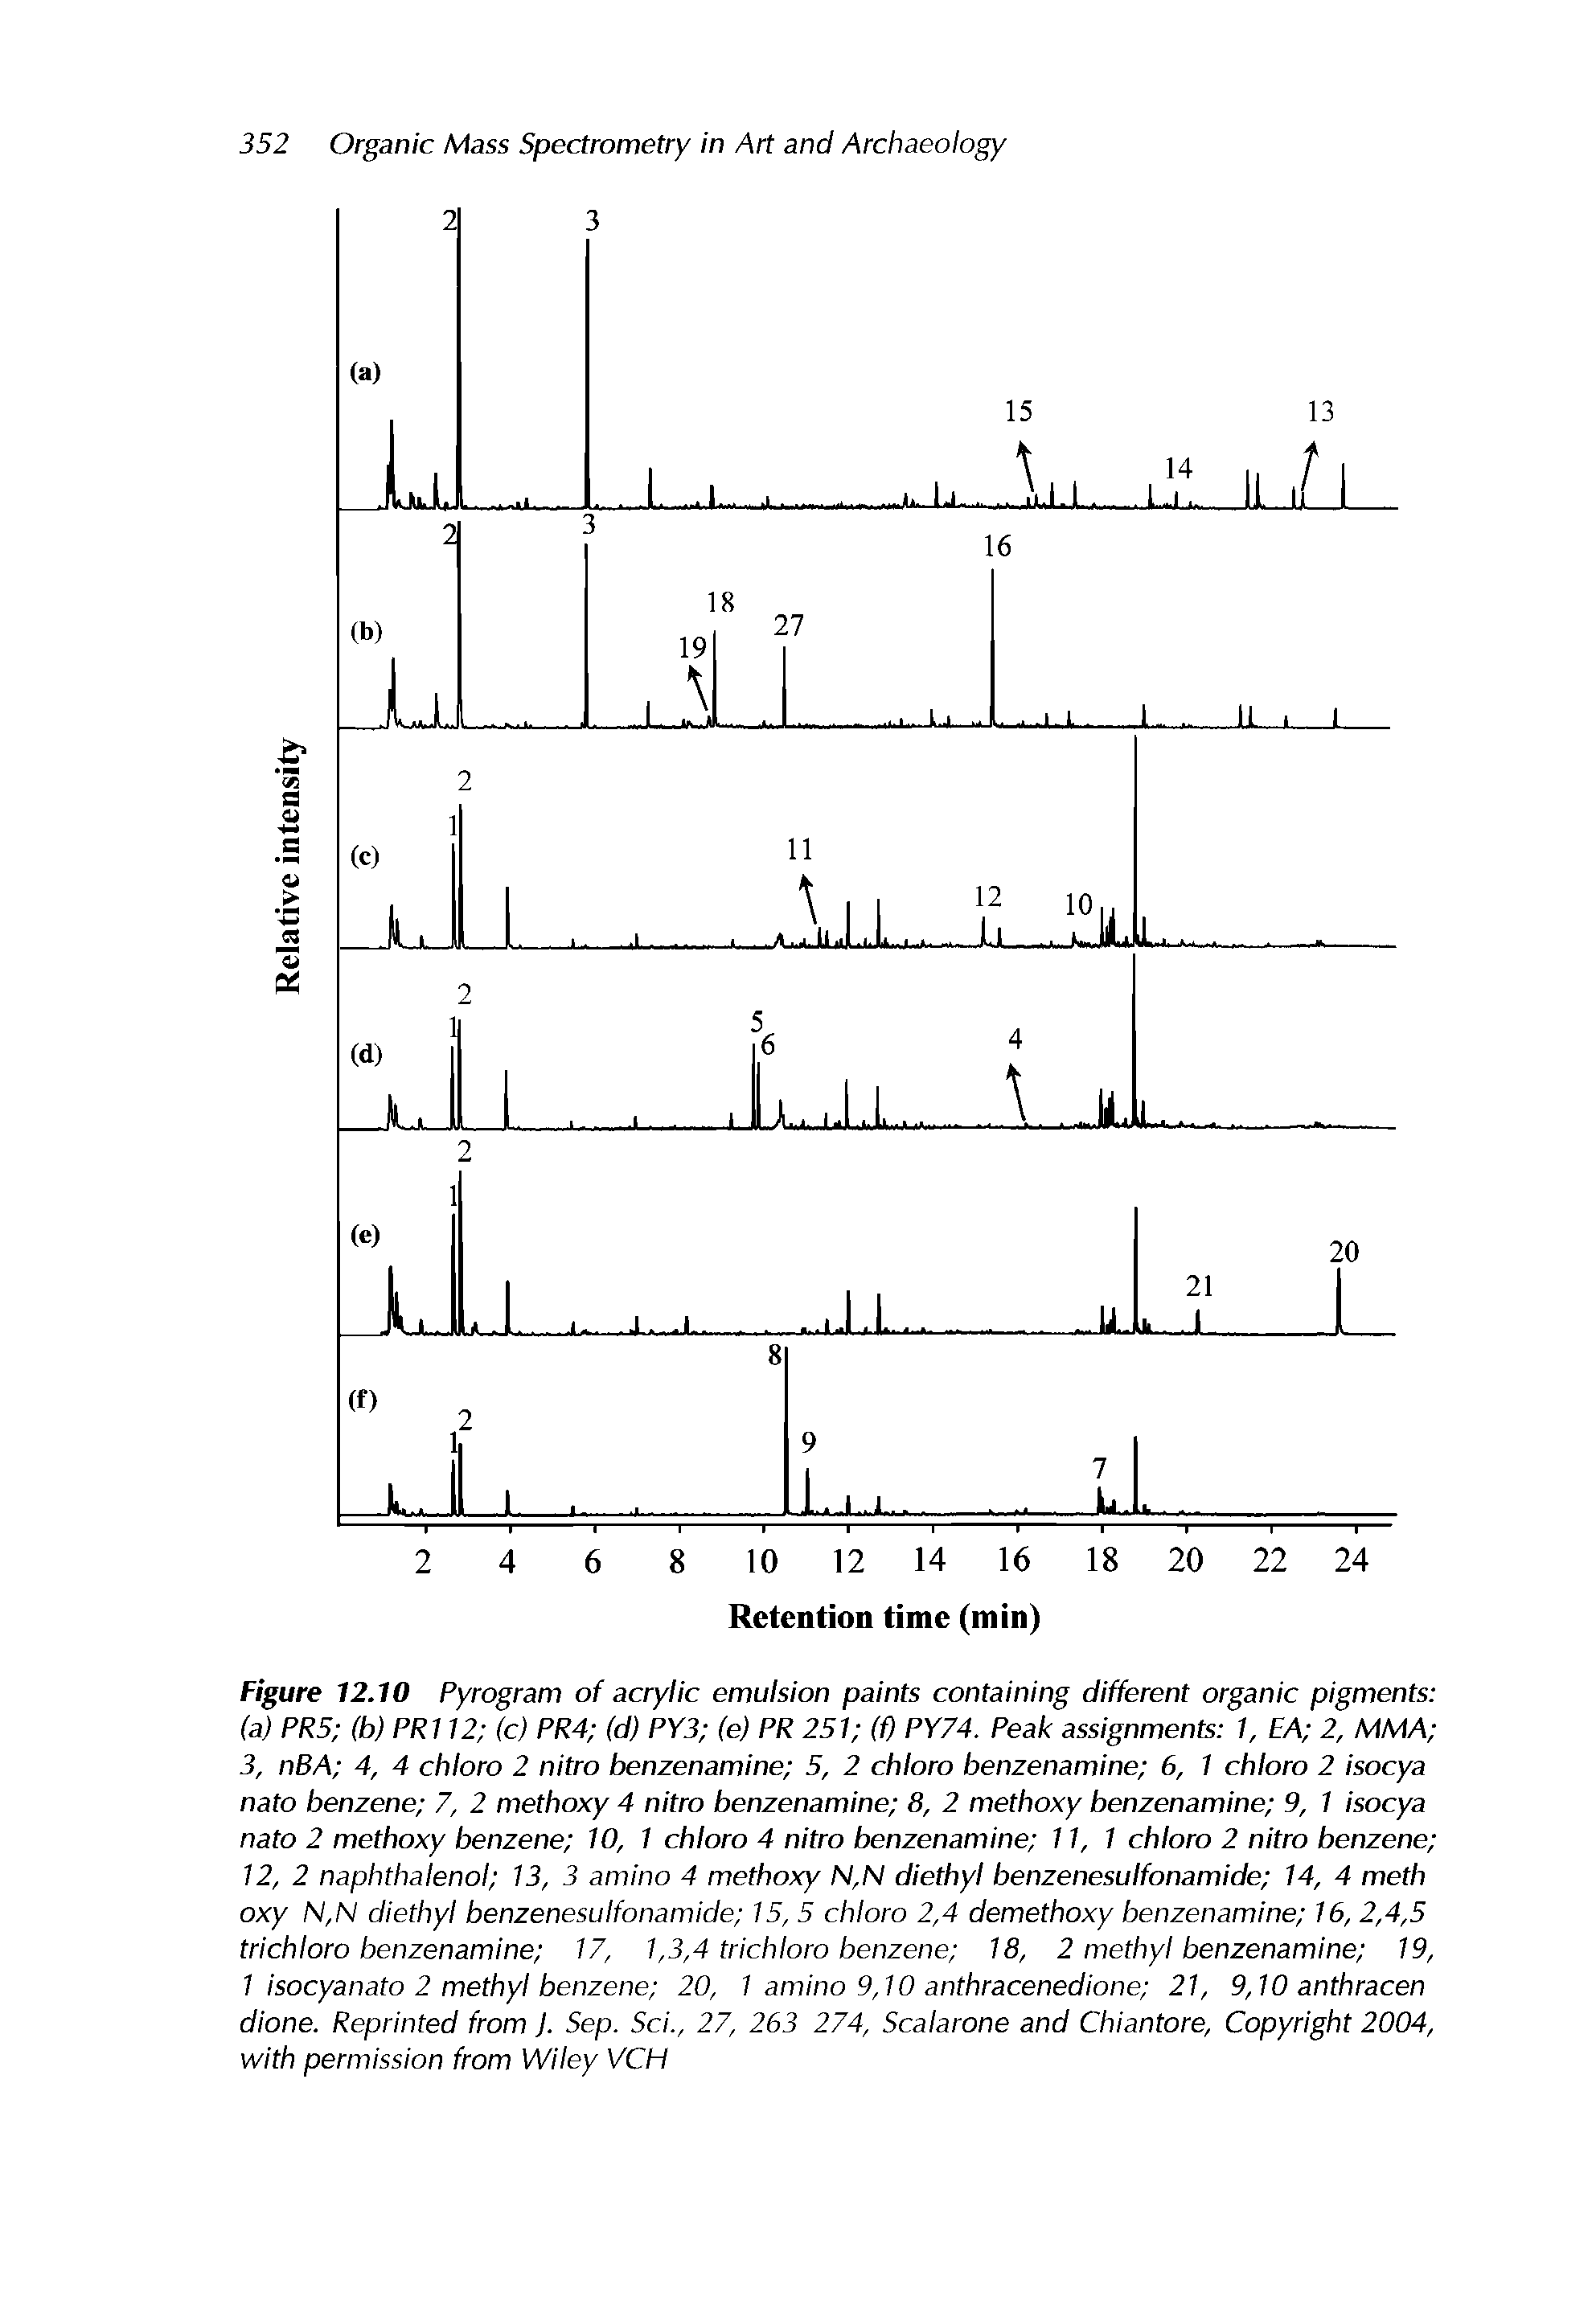 Figure 12.10 Pyrogram of acrylic emulsion paints containing different organic pigments (a) PR5 (b) PR112 (c) PR4 (d) PY3 (e) PR 251 (f) PY74. Peak assignments 1, EA 2, MMA 3, nBA 4, 4 chloro 2 nitro benzenamine 5, 2 chloro benzenamine 6, 1 chloro 2 isocya nato benzene 7, 2 methoxy 4 nitro benzenamine 8, 2 methoxy benzenamine 9, 1 isocya nato 2 methoxy benzene 10, 1 chloro 4 nitro benzenamine 11,1 chloro 2 nitro benzene 12, 2 naphthalenol 13, 3 amino 4 methoxy N,N diethyl benzenesulfonamide 14, 4 meth oxy N,N diethyl benzenesulfonamide 15, 5 chloro 2,4 demethoxy benzenamine 16, 2,4,5 trichloro benzenamine 17, 1,3,4 trichloro benzene 18, 2 methyl benzenamine 19,...